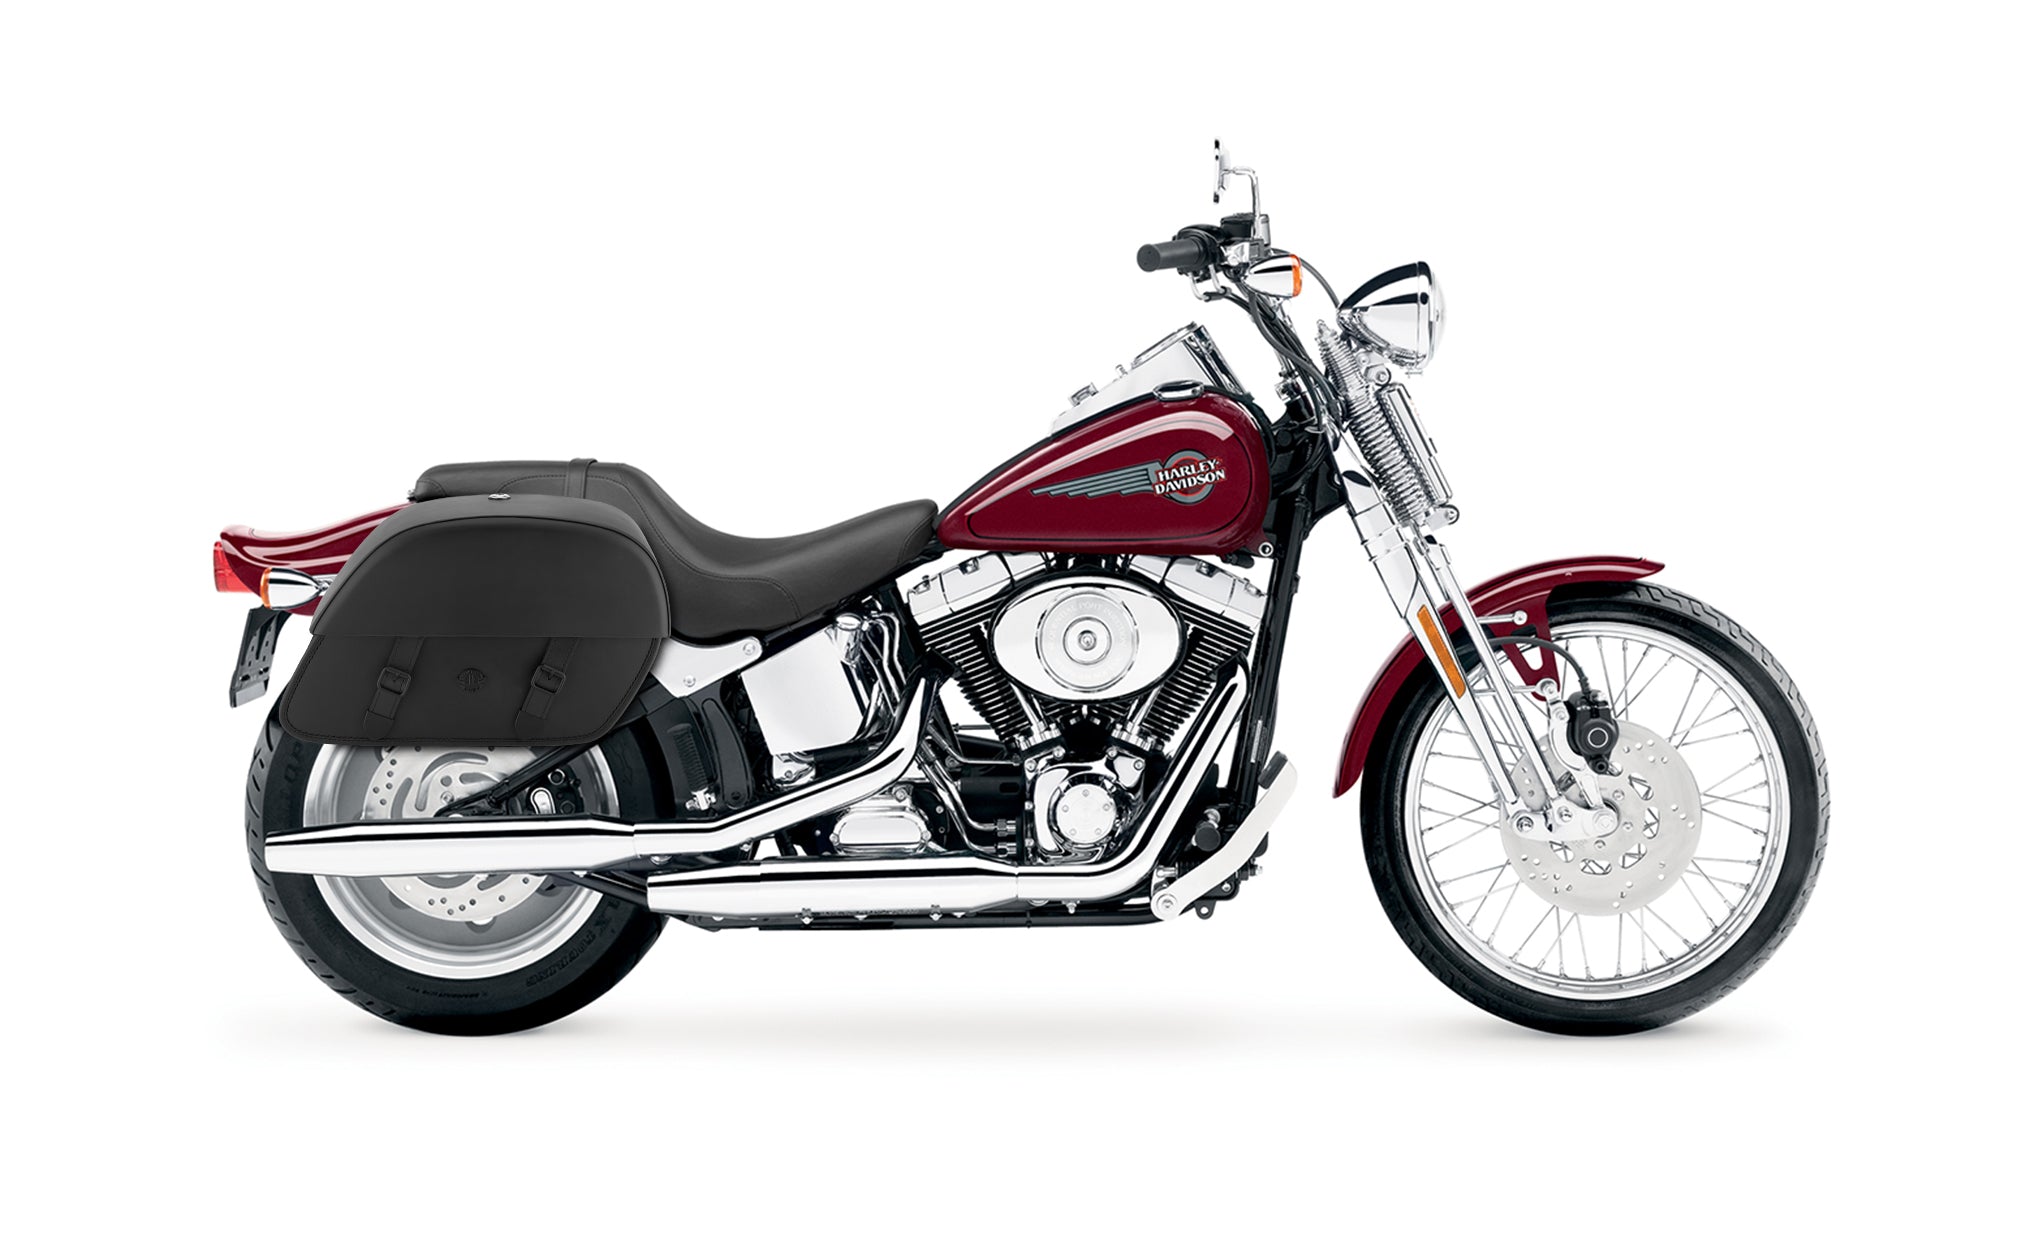 28L - Baelor Medium Motorcycle Saddlebags for Harley Softail Springer FXSTS/I @expand